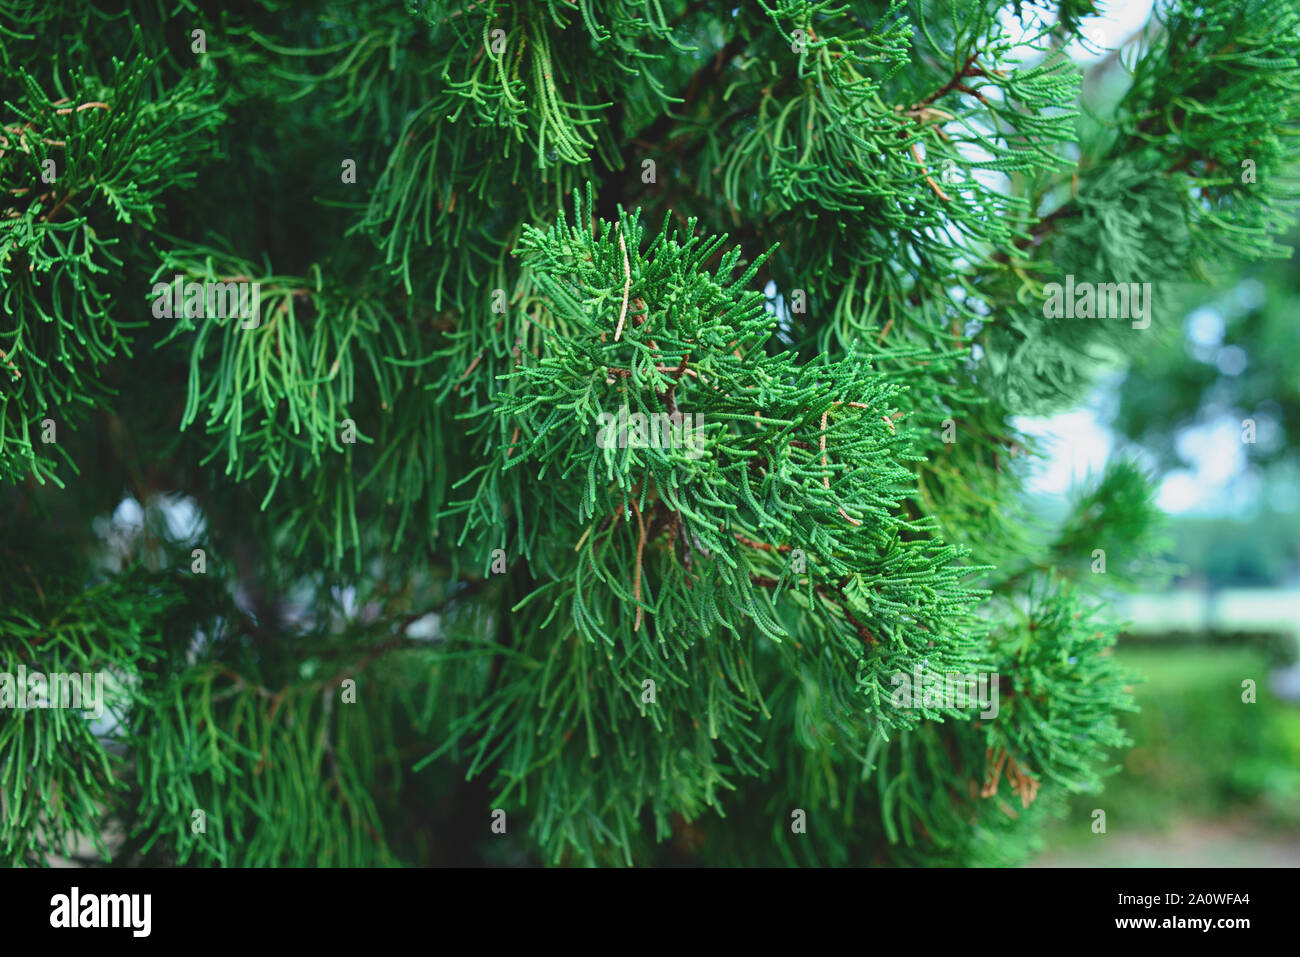 Thuja tree branches, thuja occidentalis evergreen coniferous tree. Stock Photo